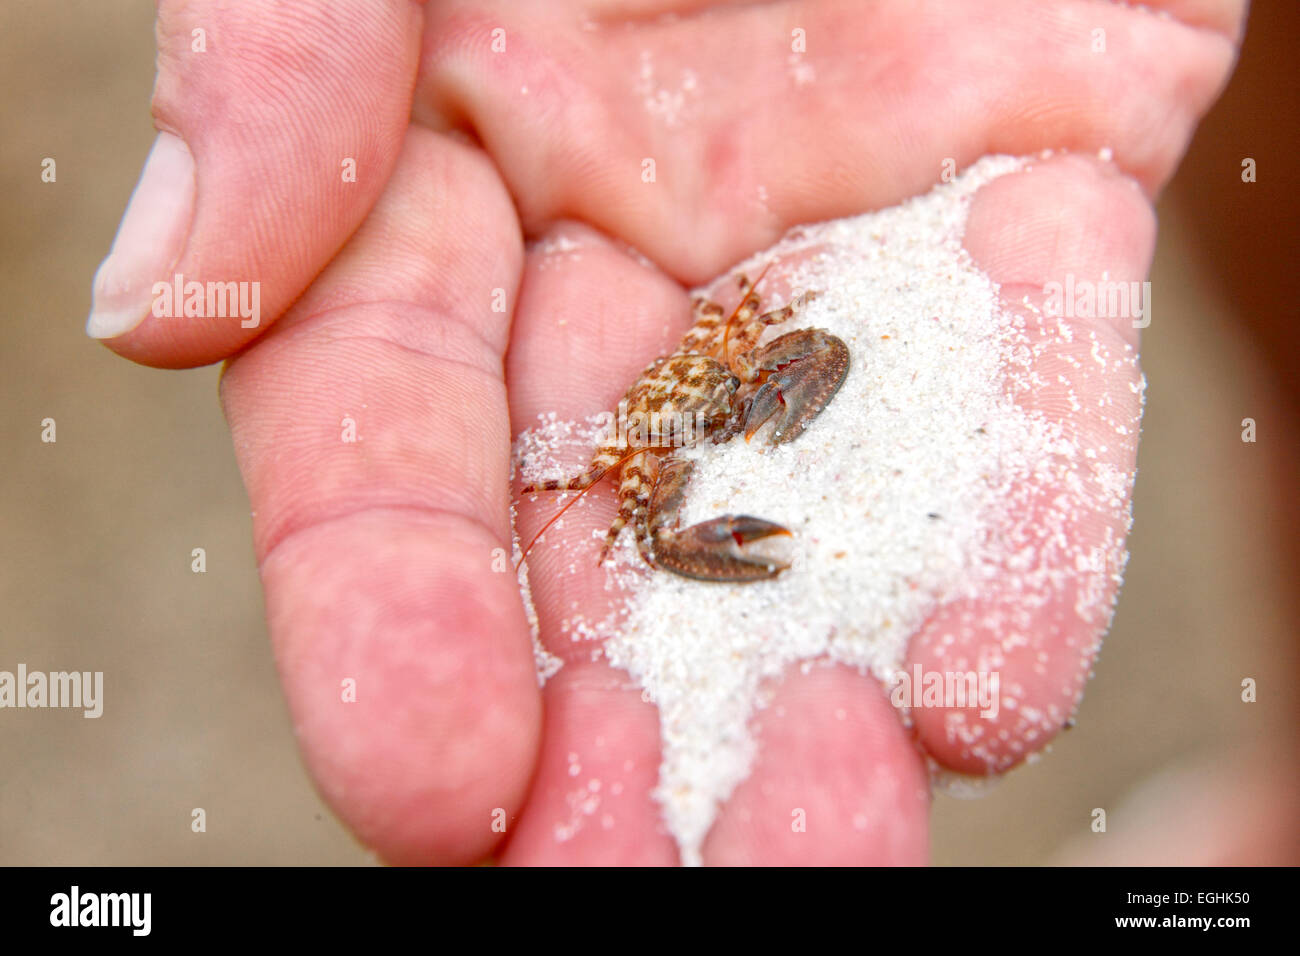 Small crab on humans hand, Seychelles island, La Digue Stock Photo